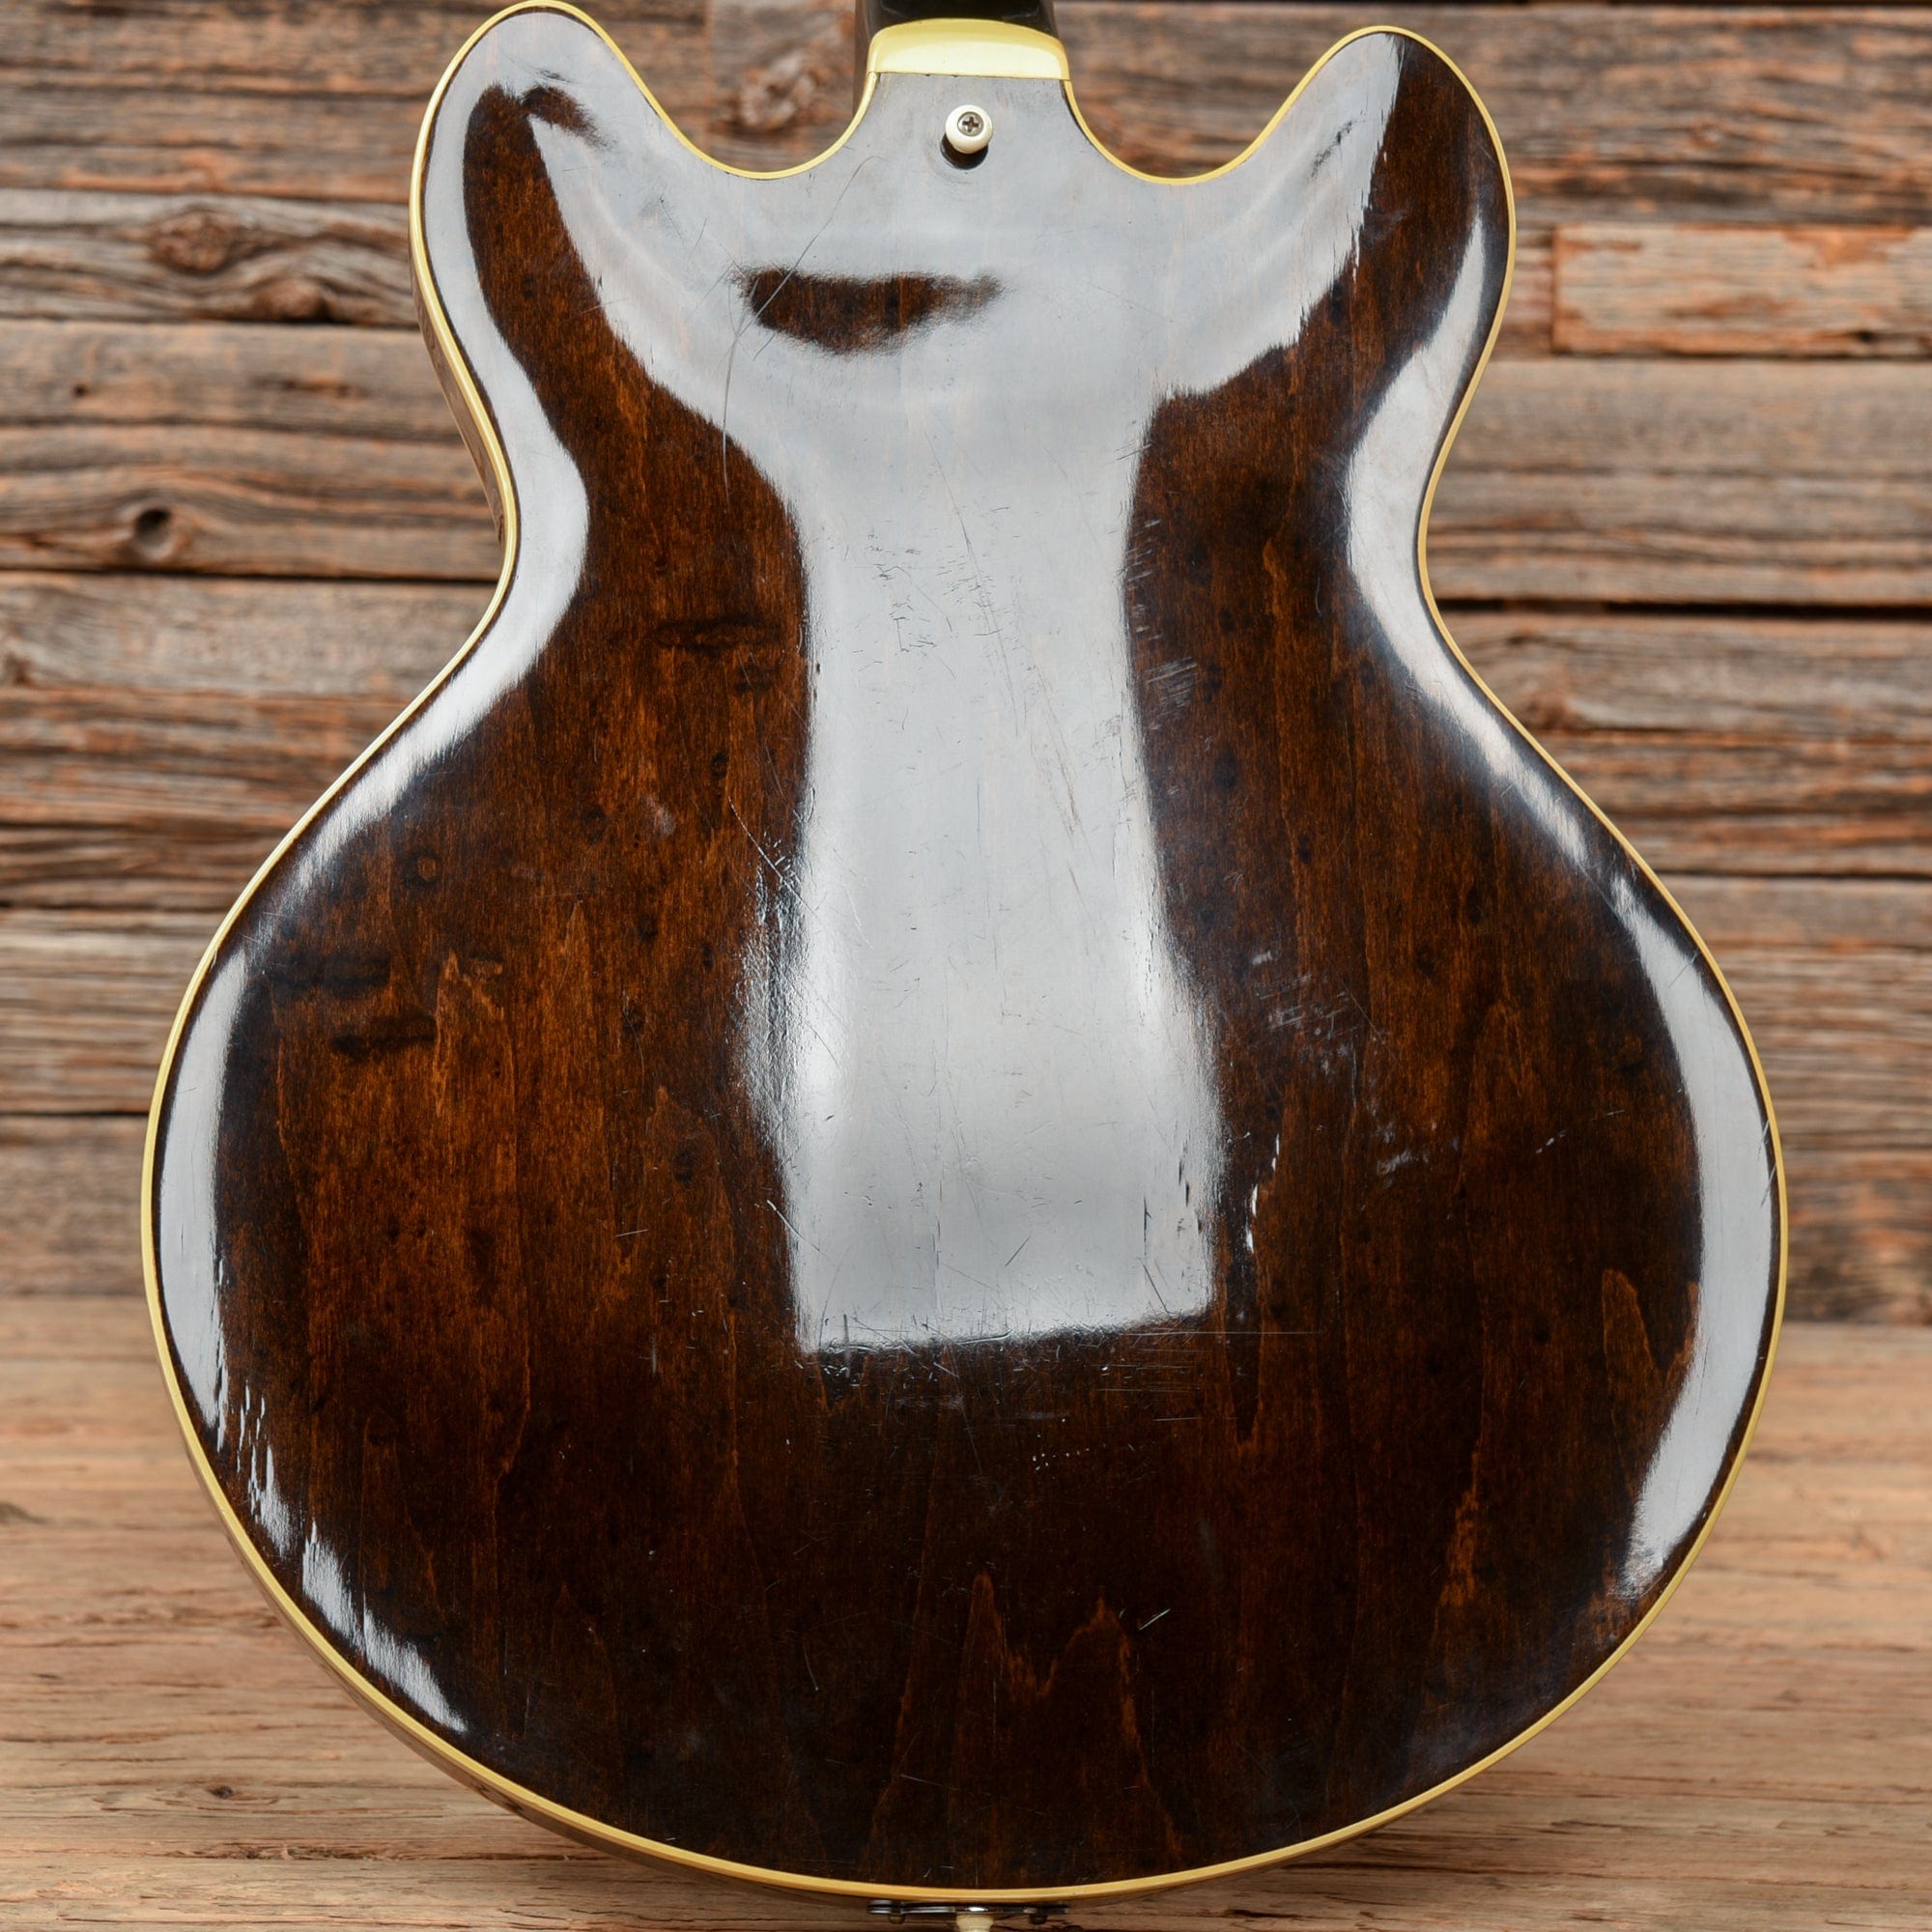 Gibson ES-325 Walnut 1975 Electric Guitars / Semi-Hollow